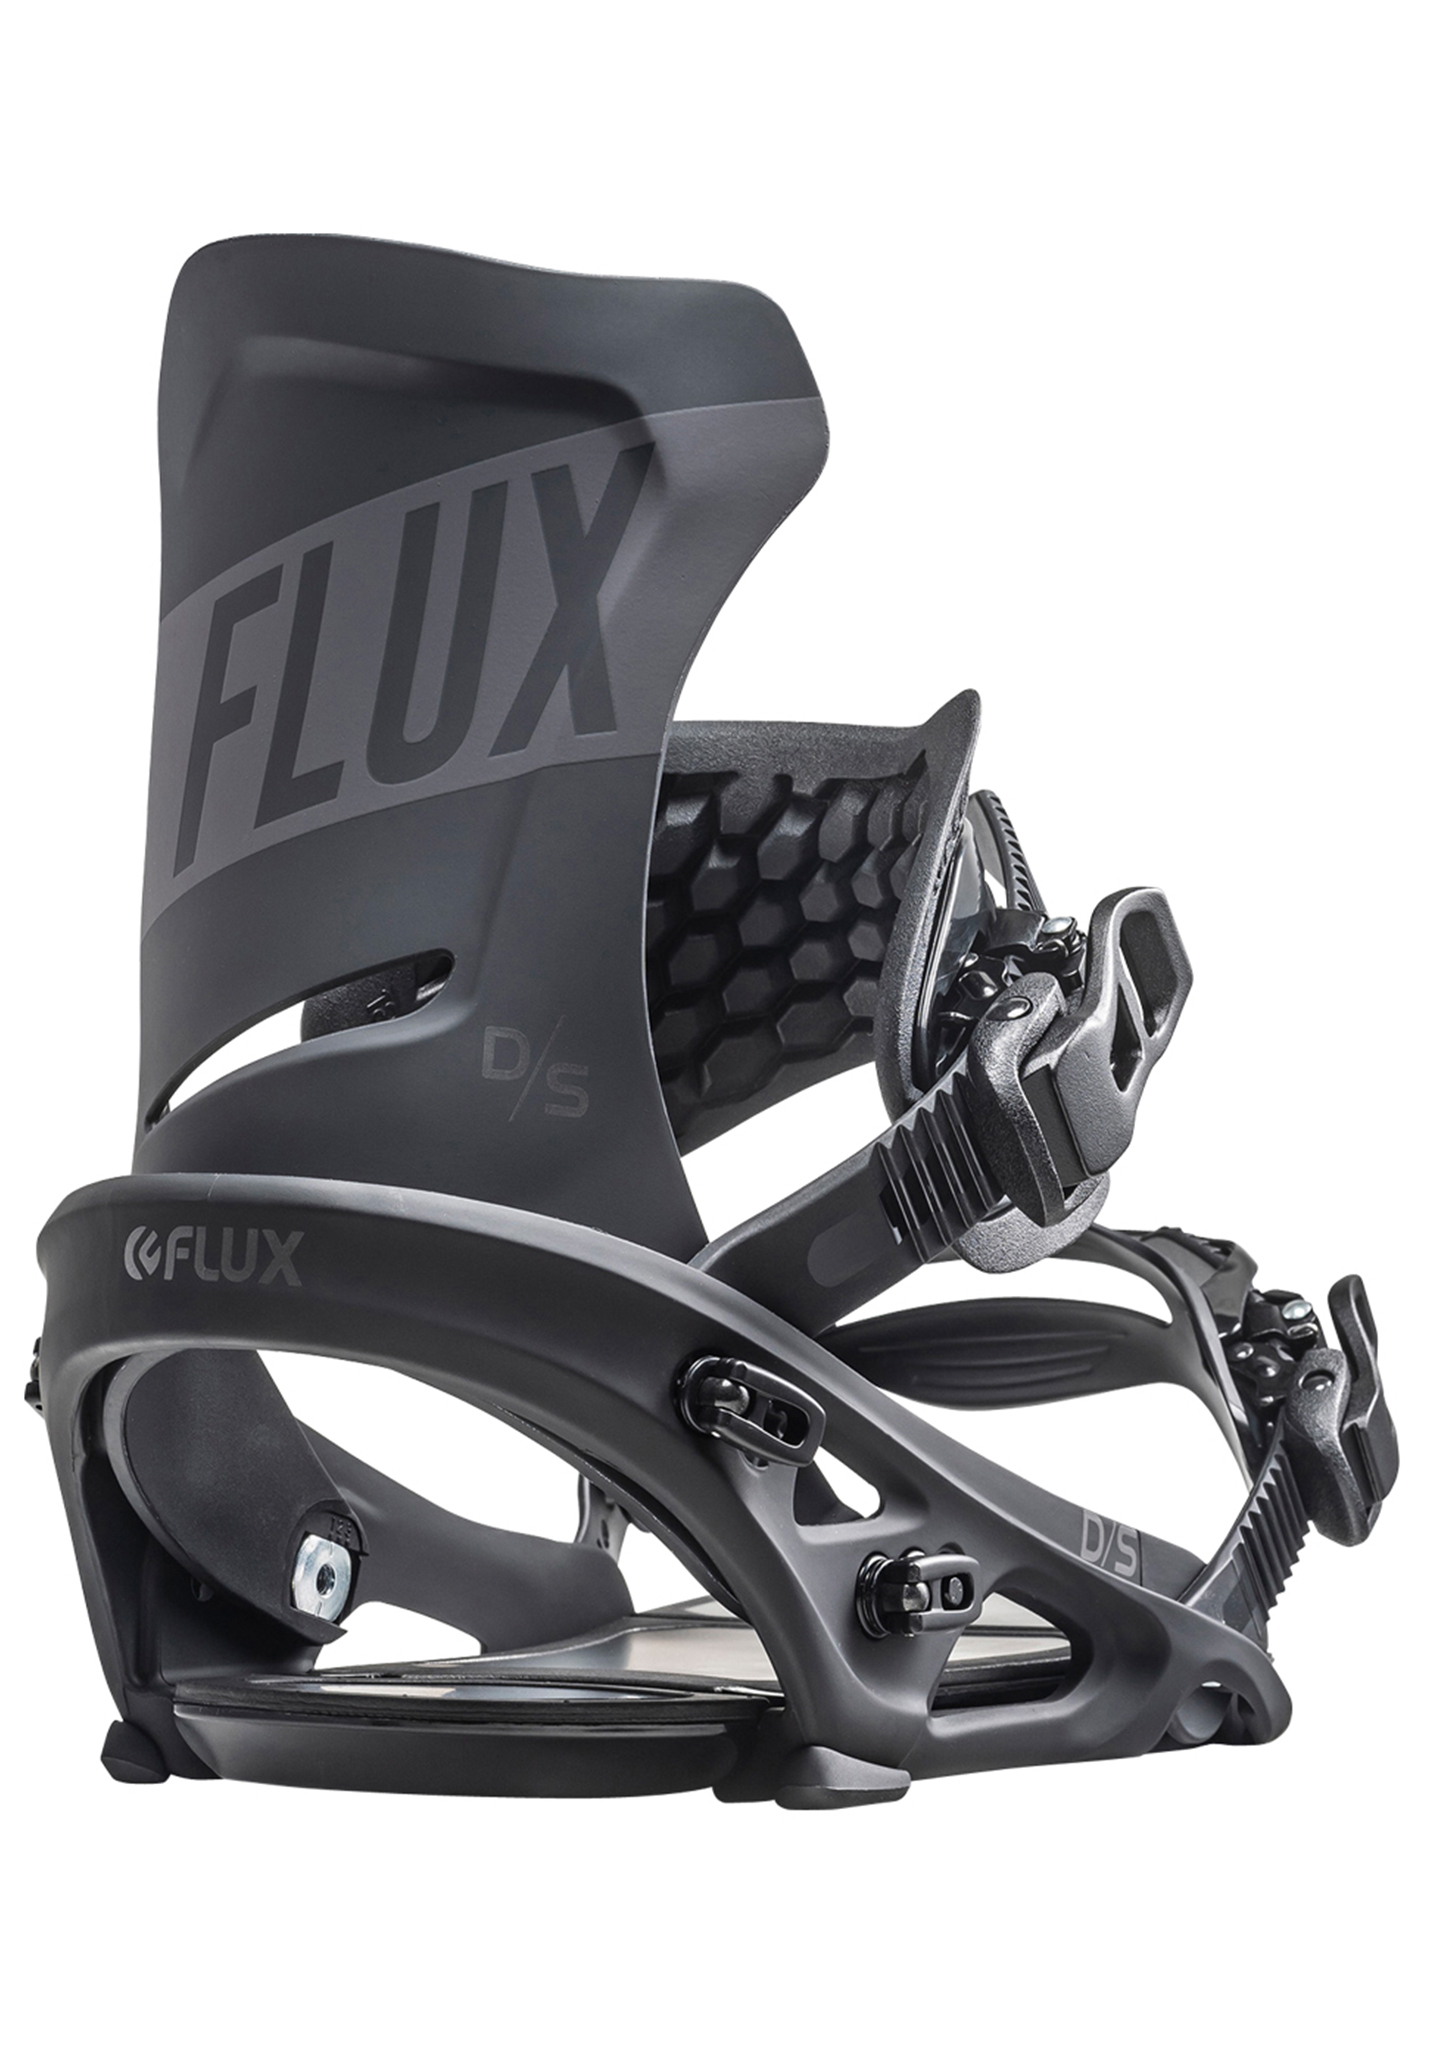 Flux DS Snowboardbindungen black L